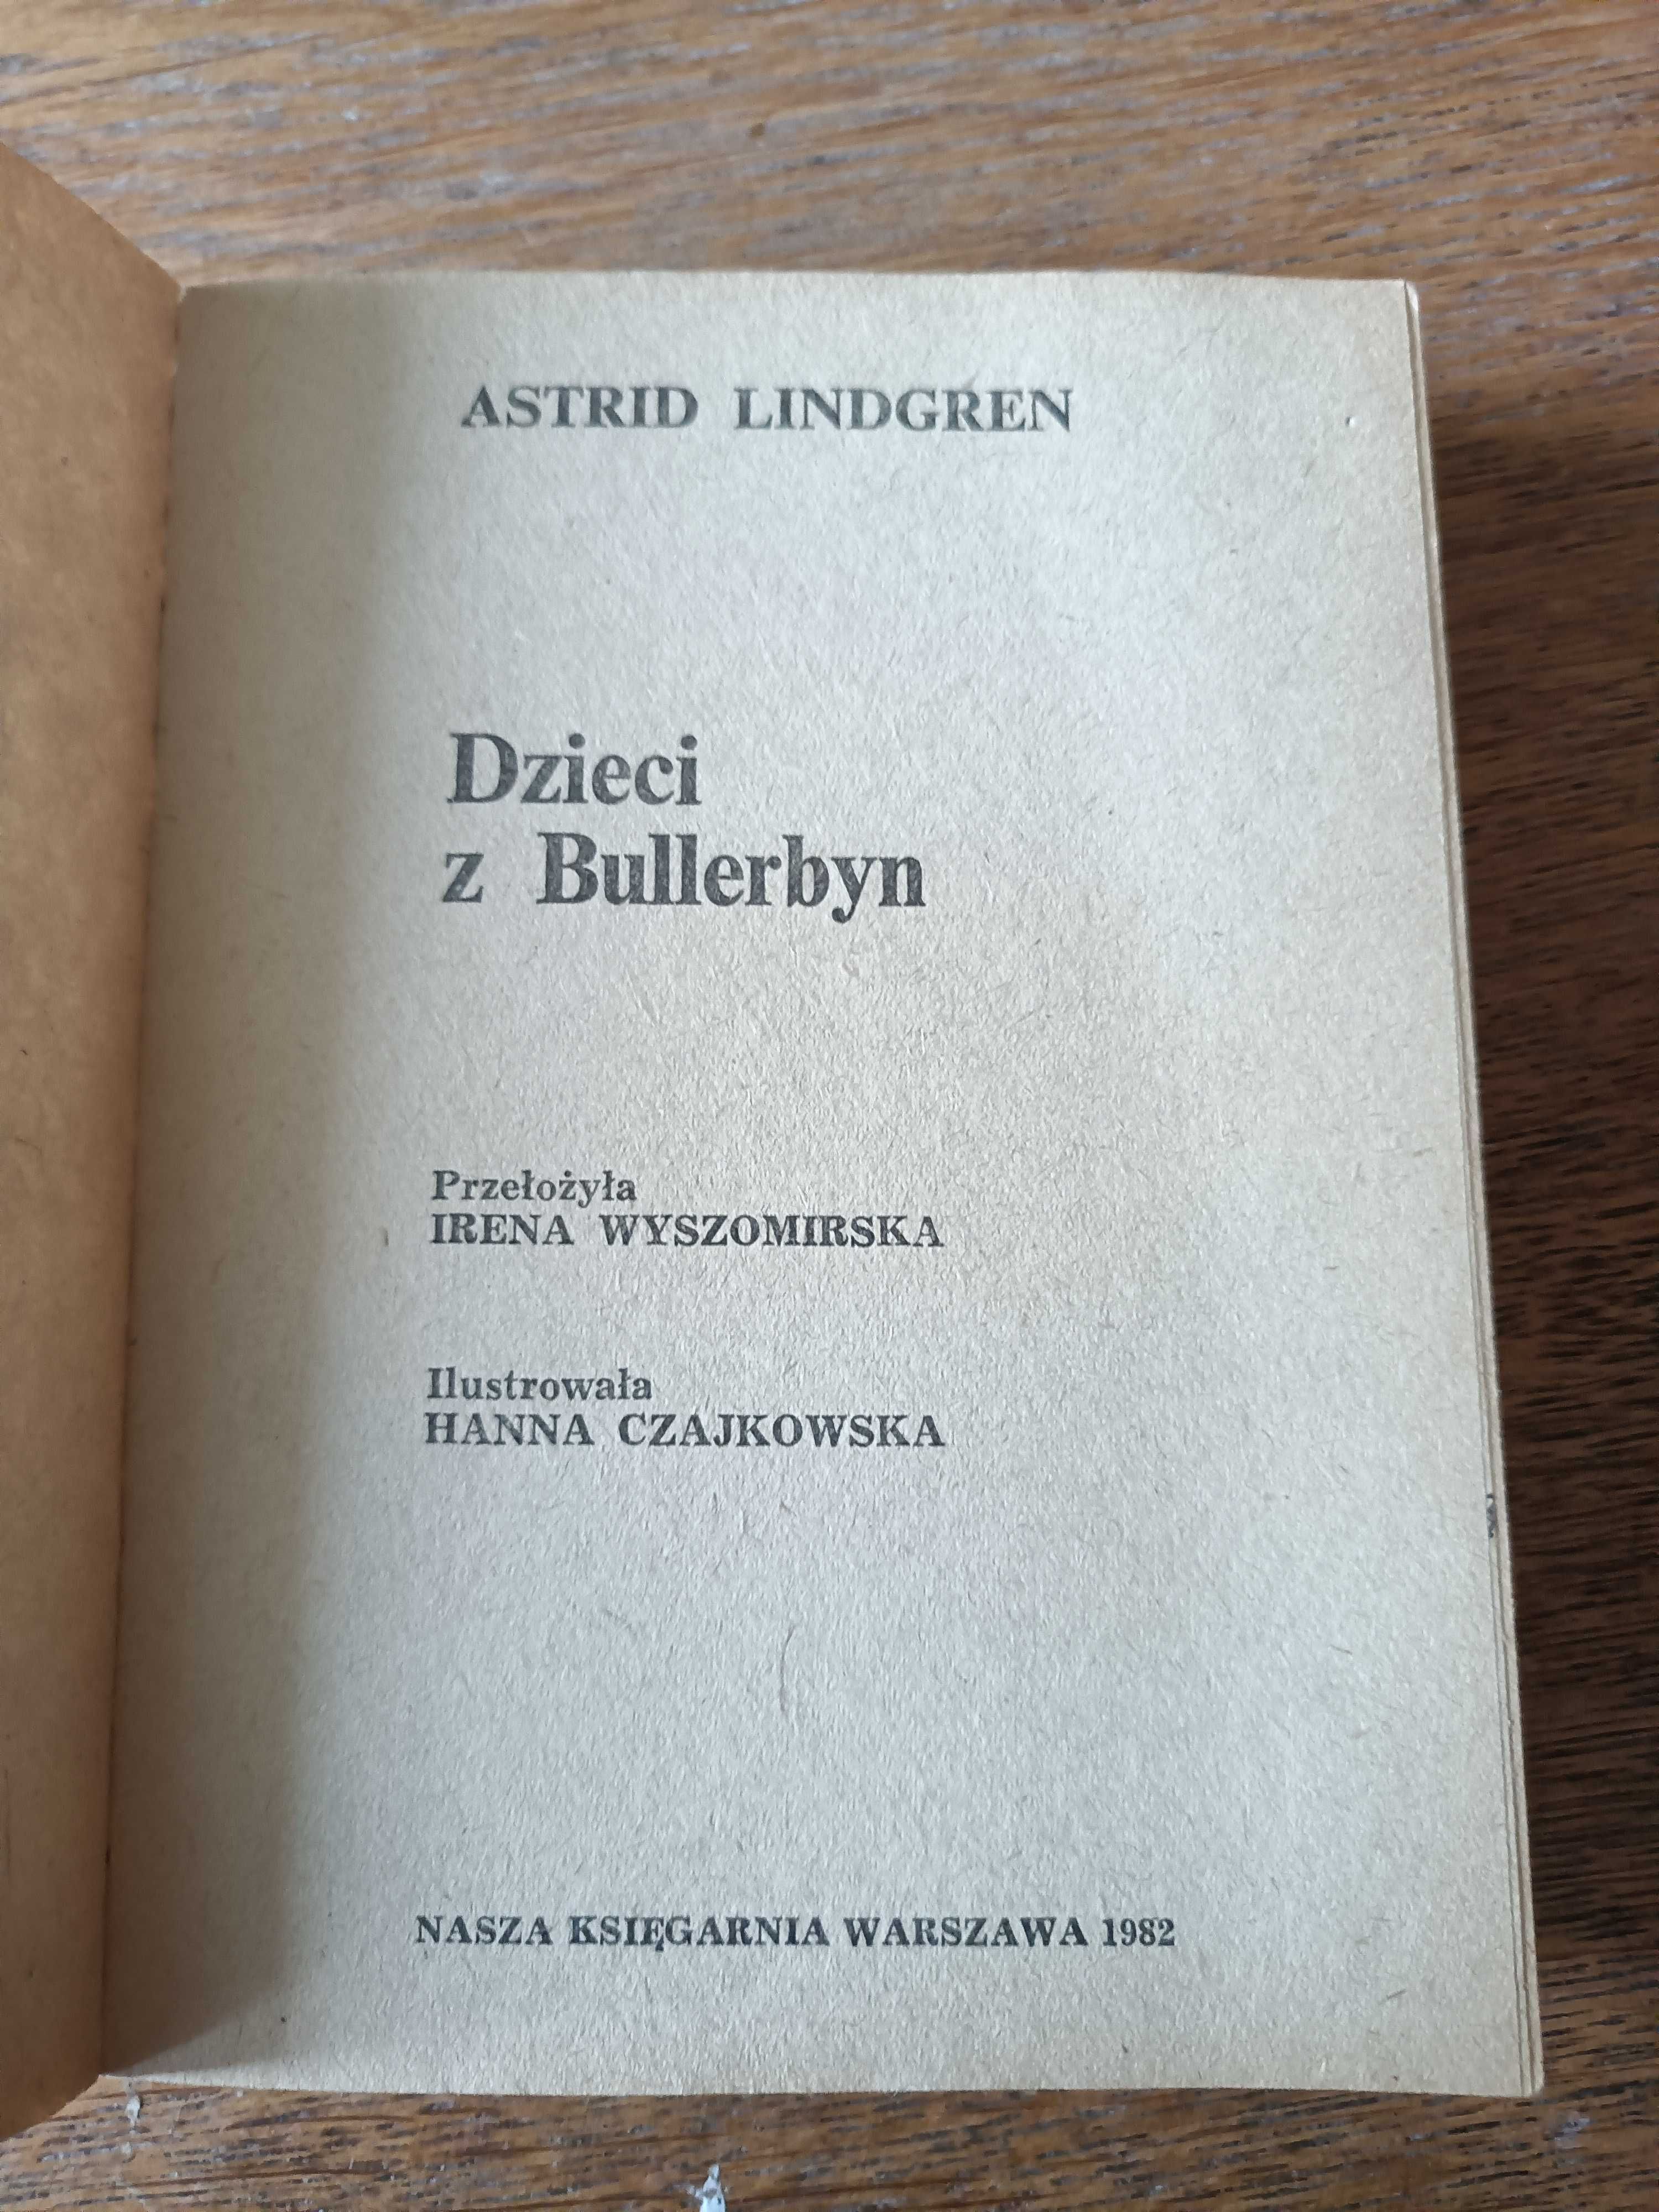 Dzieci z bullerbyn, Astrid Lindgren